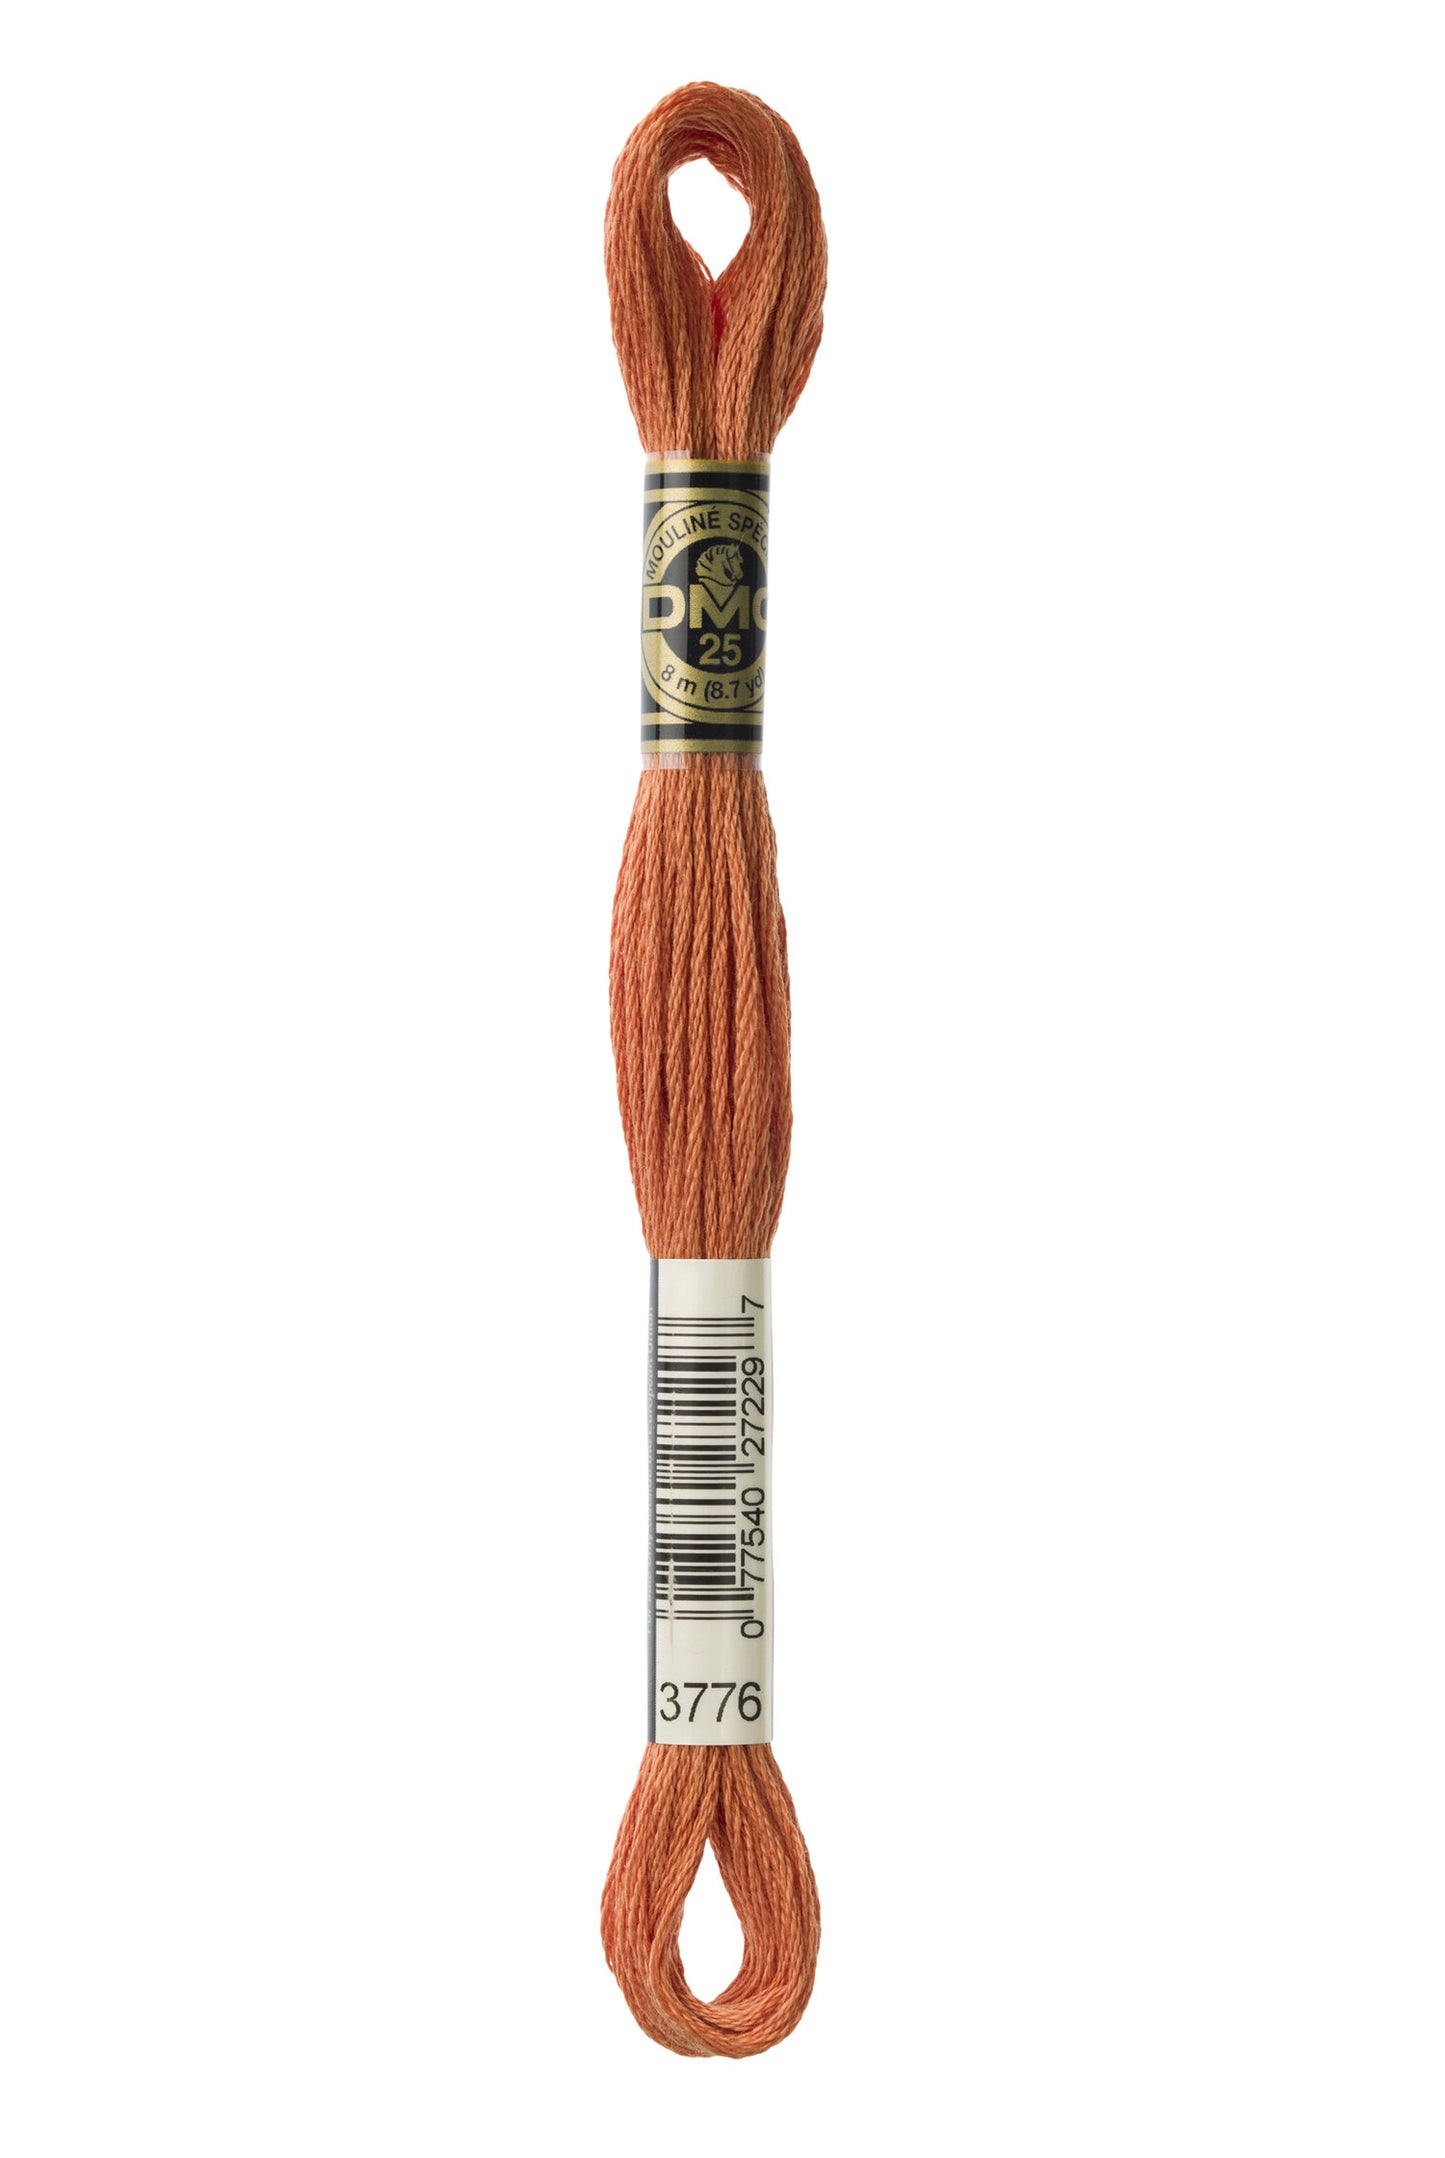 DMC 3776 - Mahogany - Light - DMC 6 Strand Embroidery Thread, Thread & Floss, Thread & Floss, The Crafty Grimalkin - A Cross Stitch Store